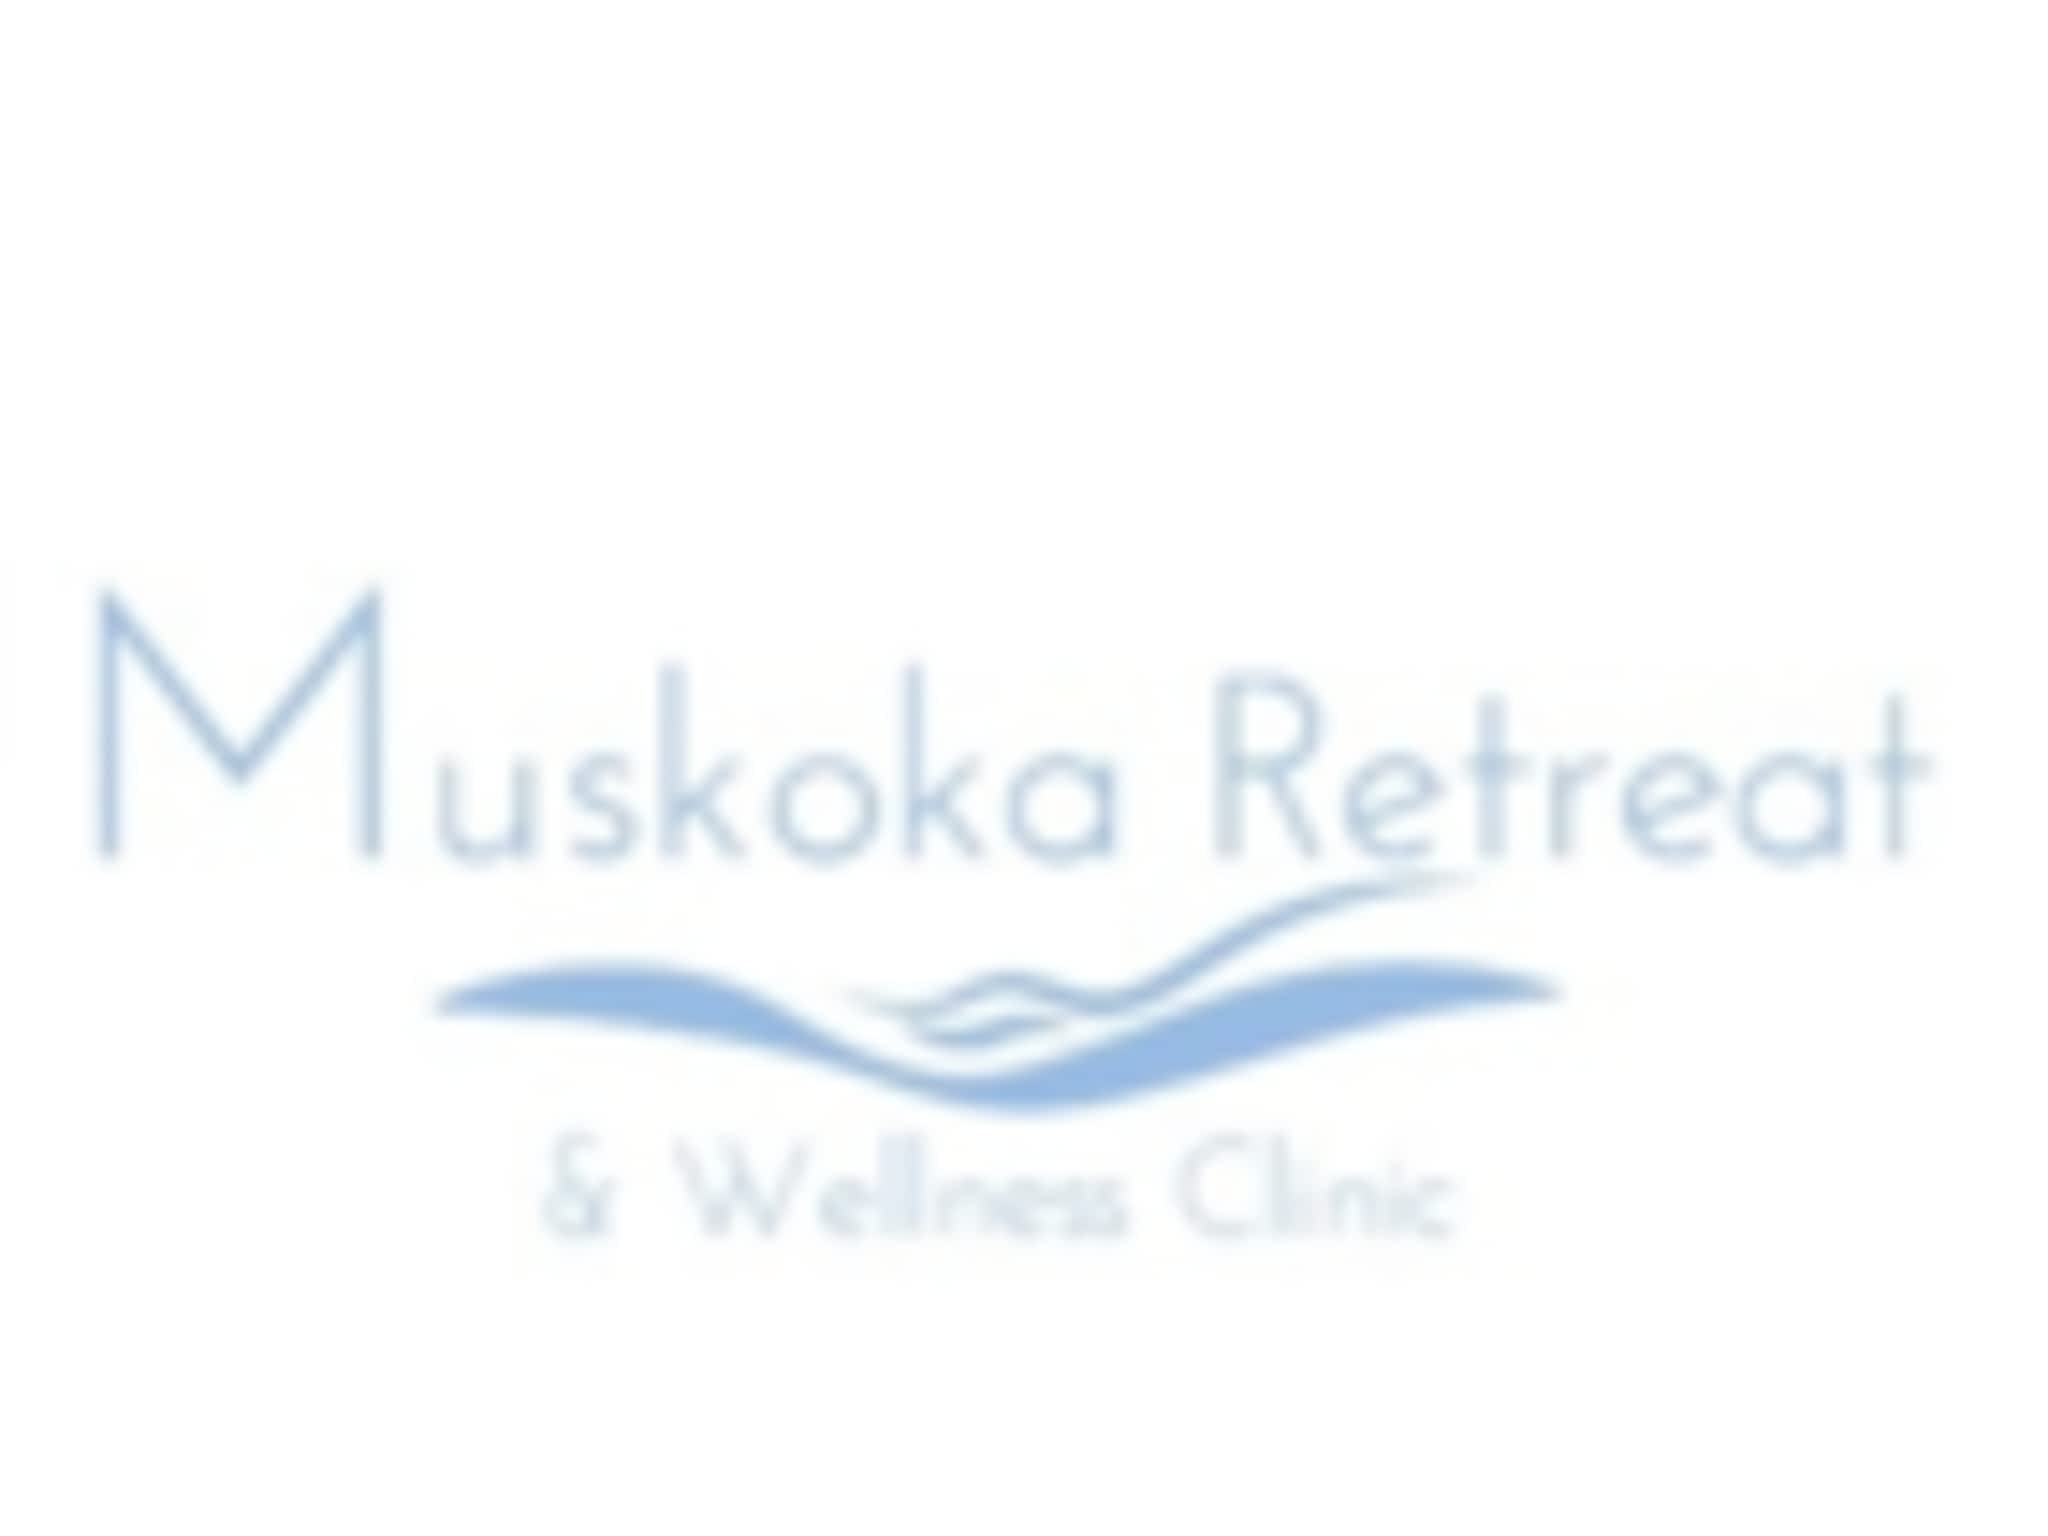 photo Muskoka Retreat & Wellness Clinic